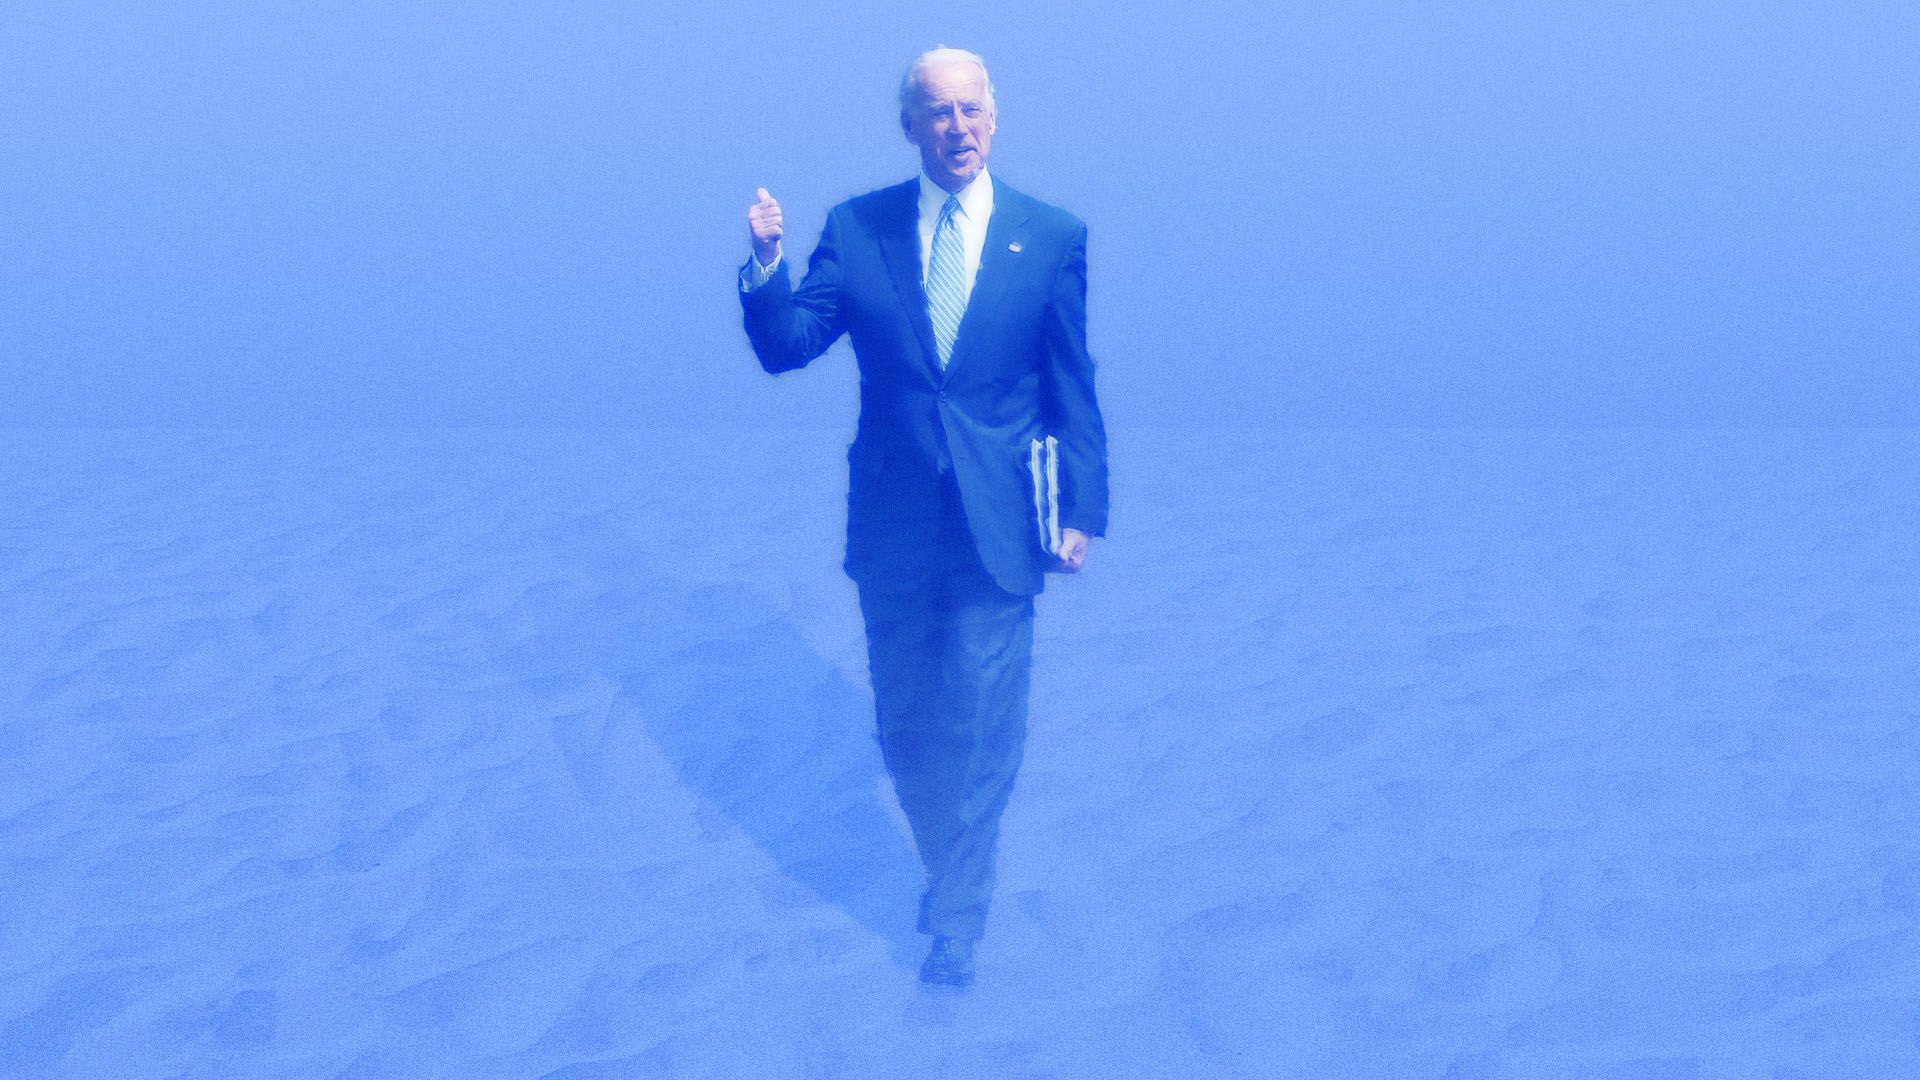  Illustration of Joseph Biden as a mirage in a desert